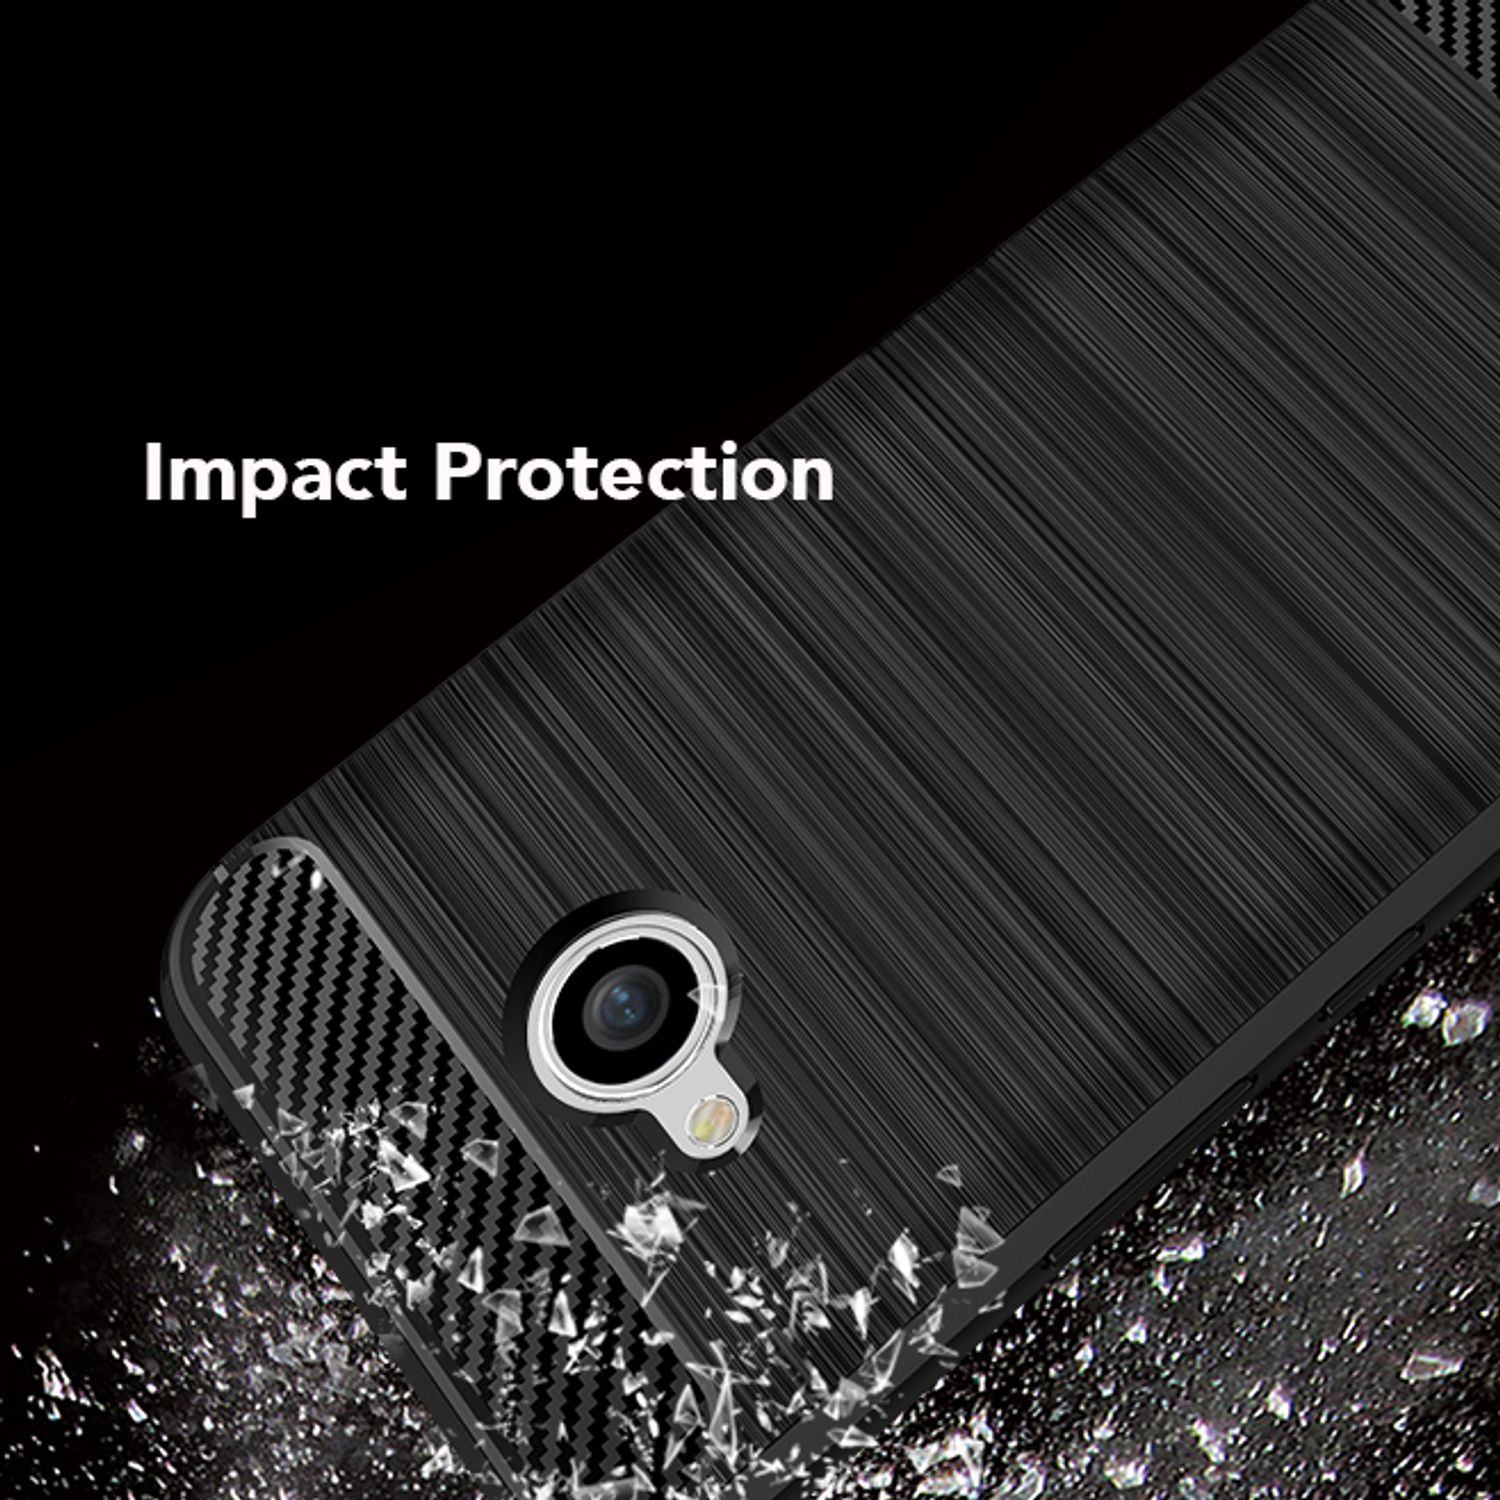 NALIA Carbon-Look Silikon U11 HTC, Backcover, Hülle, Life, Schwarz